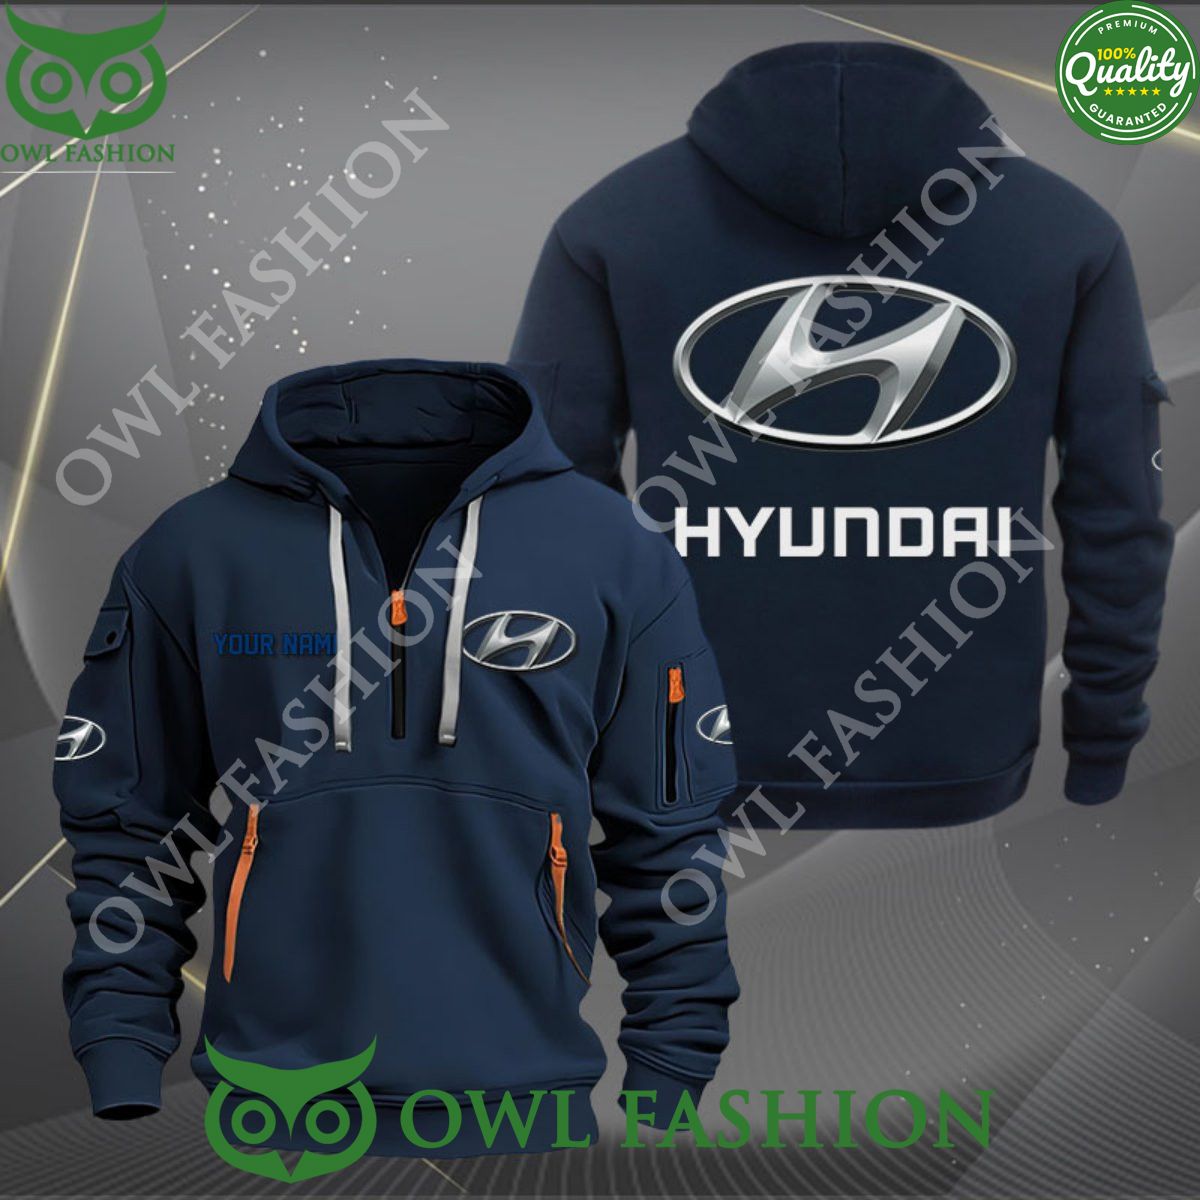 hyundai car motor personalized 2d half zipper hoodie 1 oubfb.jpg